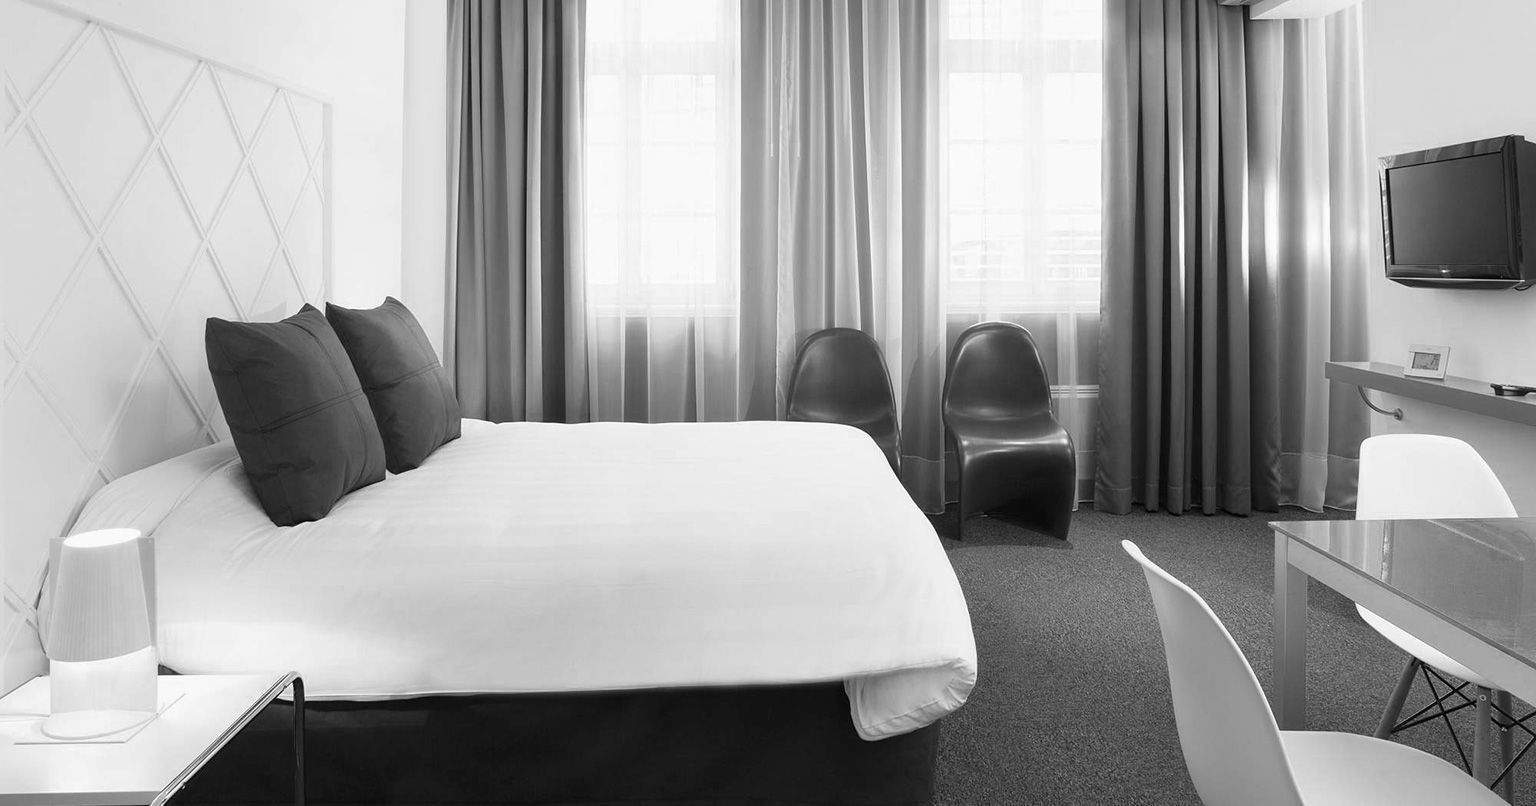 Appart Hotel Villa Diana in Molsheim in Alsace